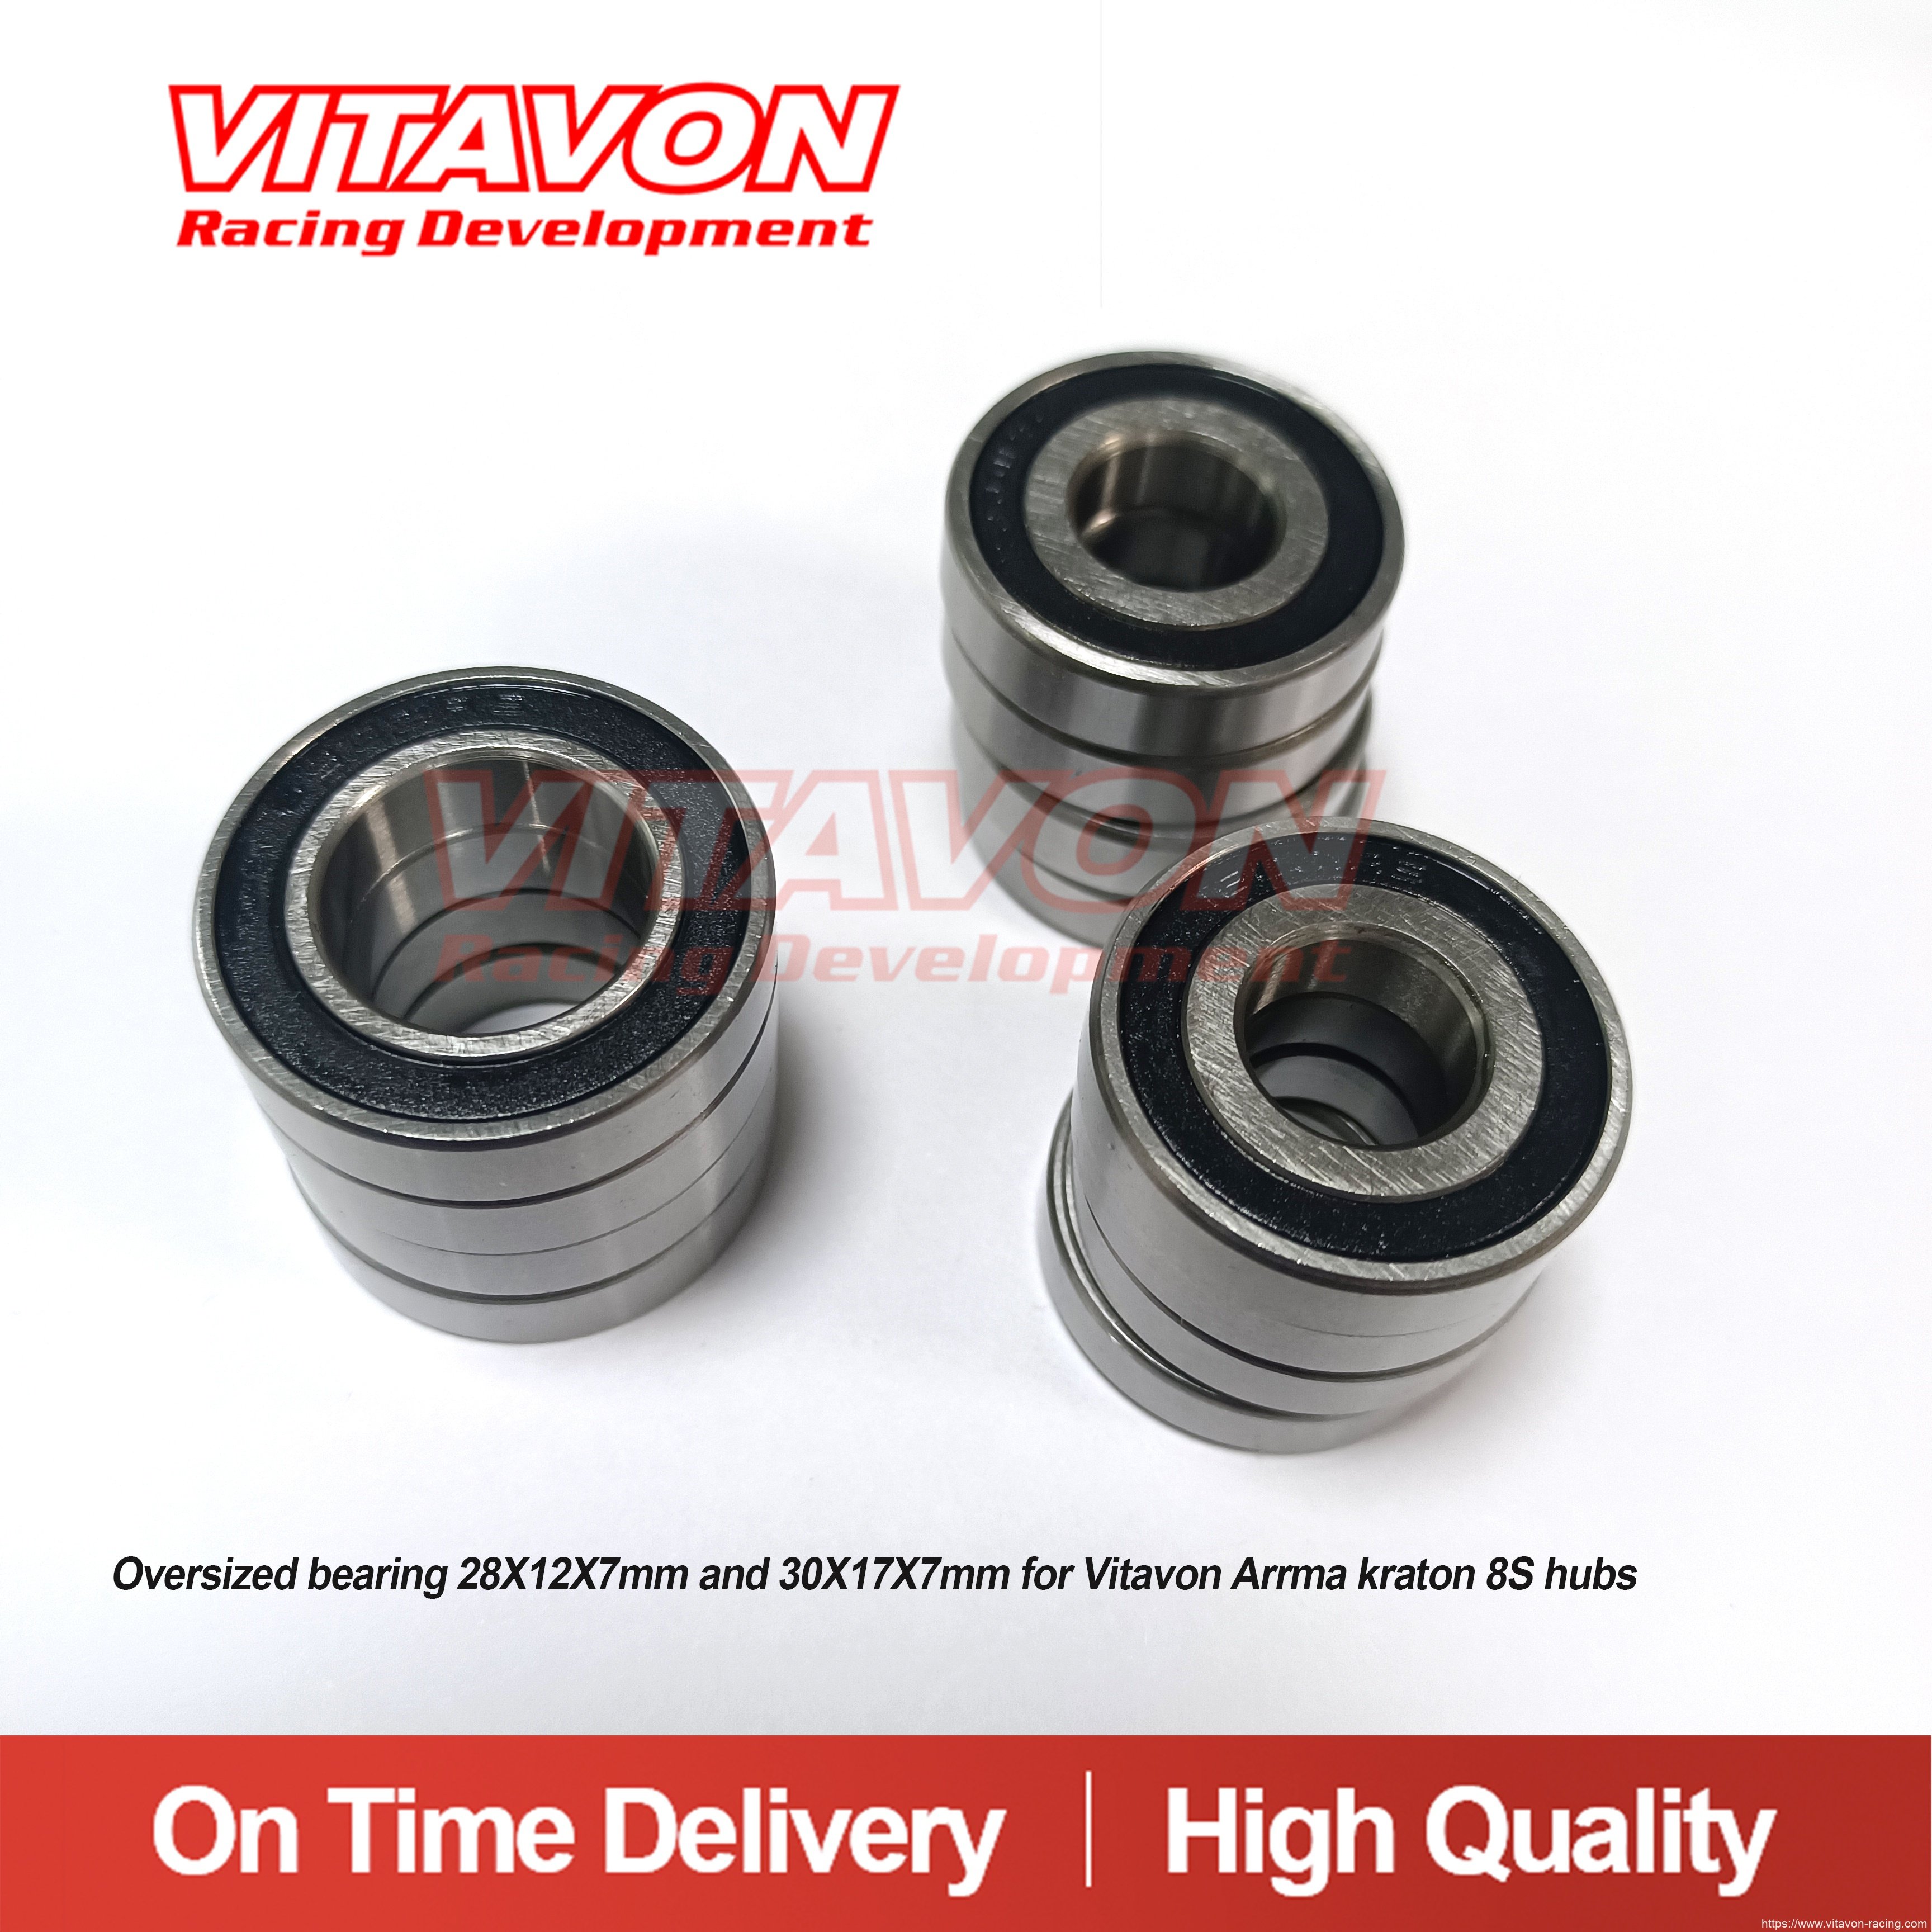 Oversized bearing 28X12X7mm and 30X17X7mm for Vitavon Arrma kraton 8S hubs